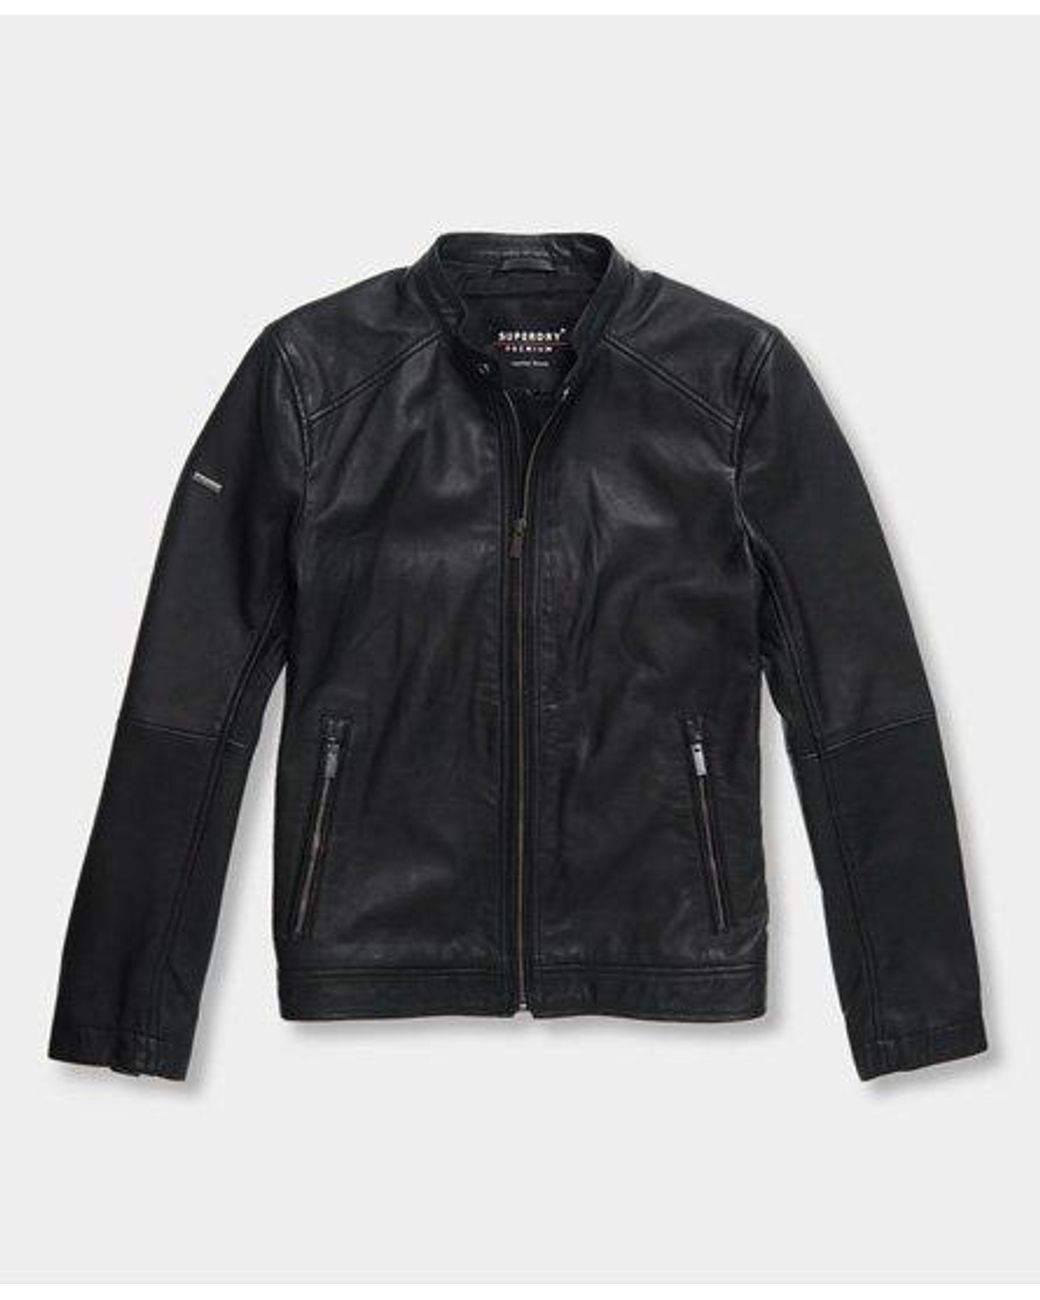 Superdry Curtis Leather Jacket in Black for Men - Save 8% - Lyst